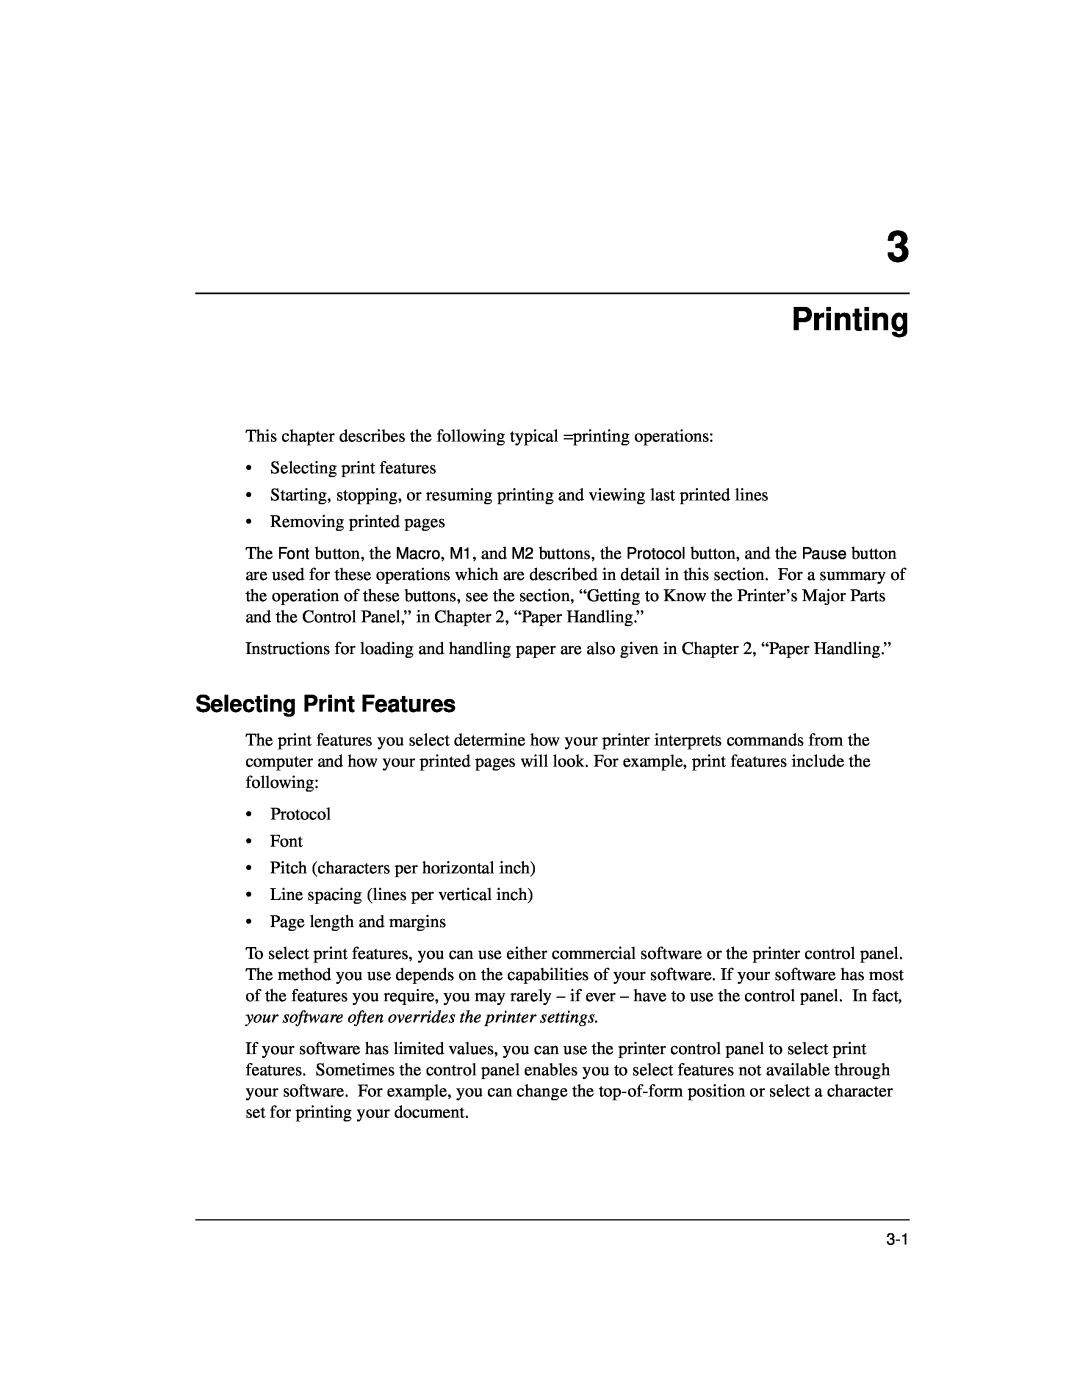 Genicom LA36 manual Printing, Selecting Print Features 